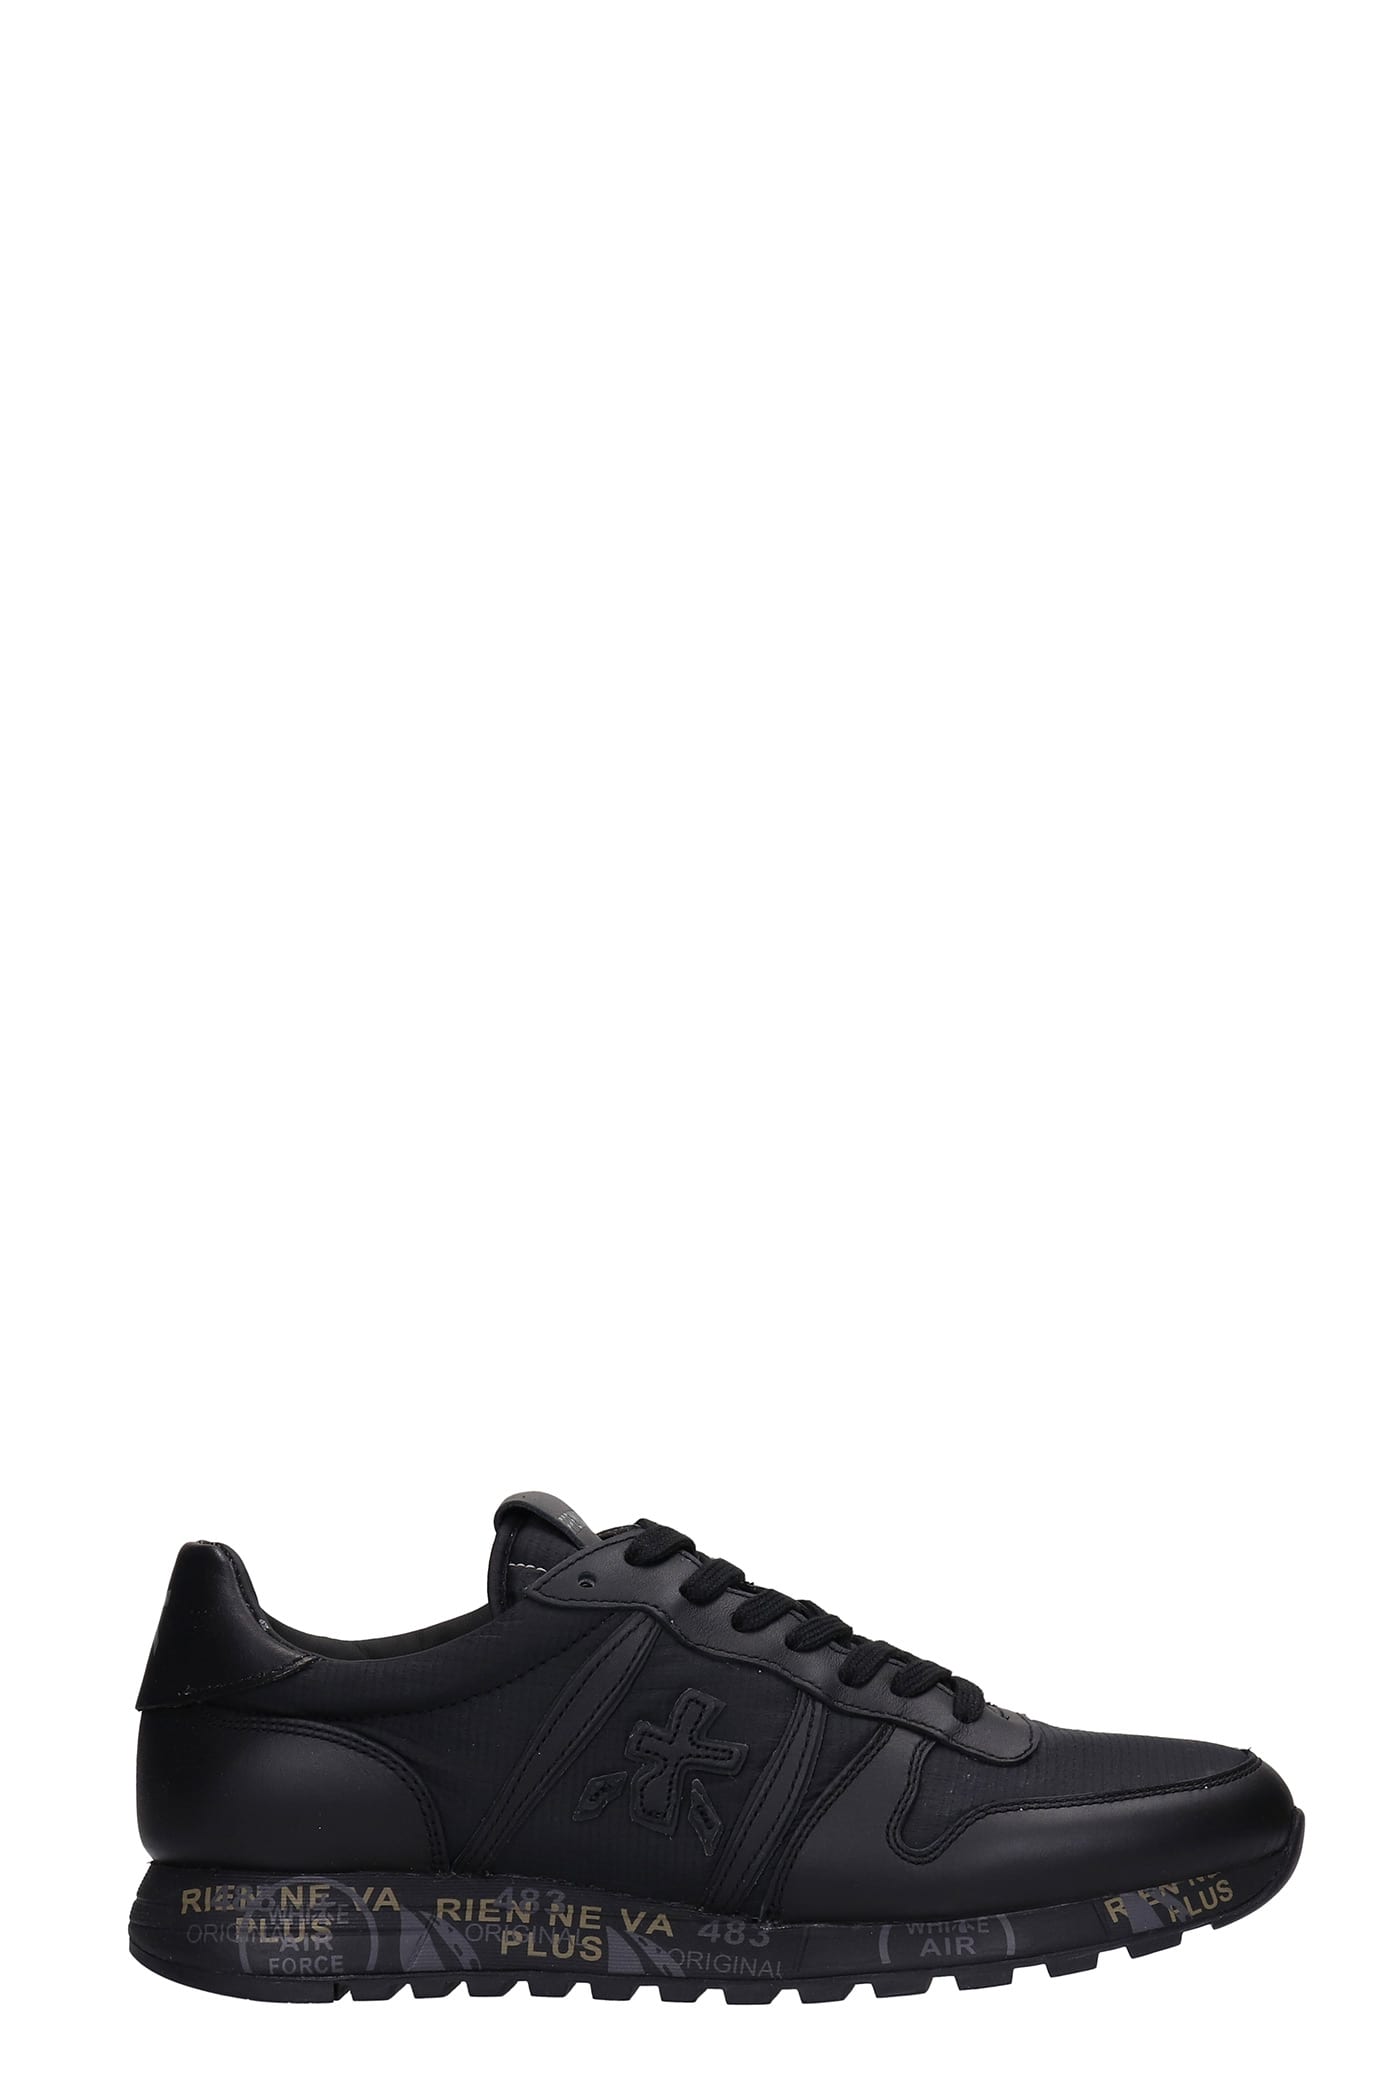 Premiata Eric Sneakers In Black Leather